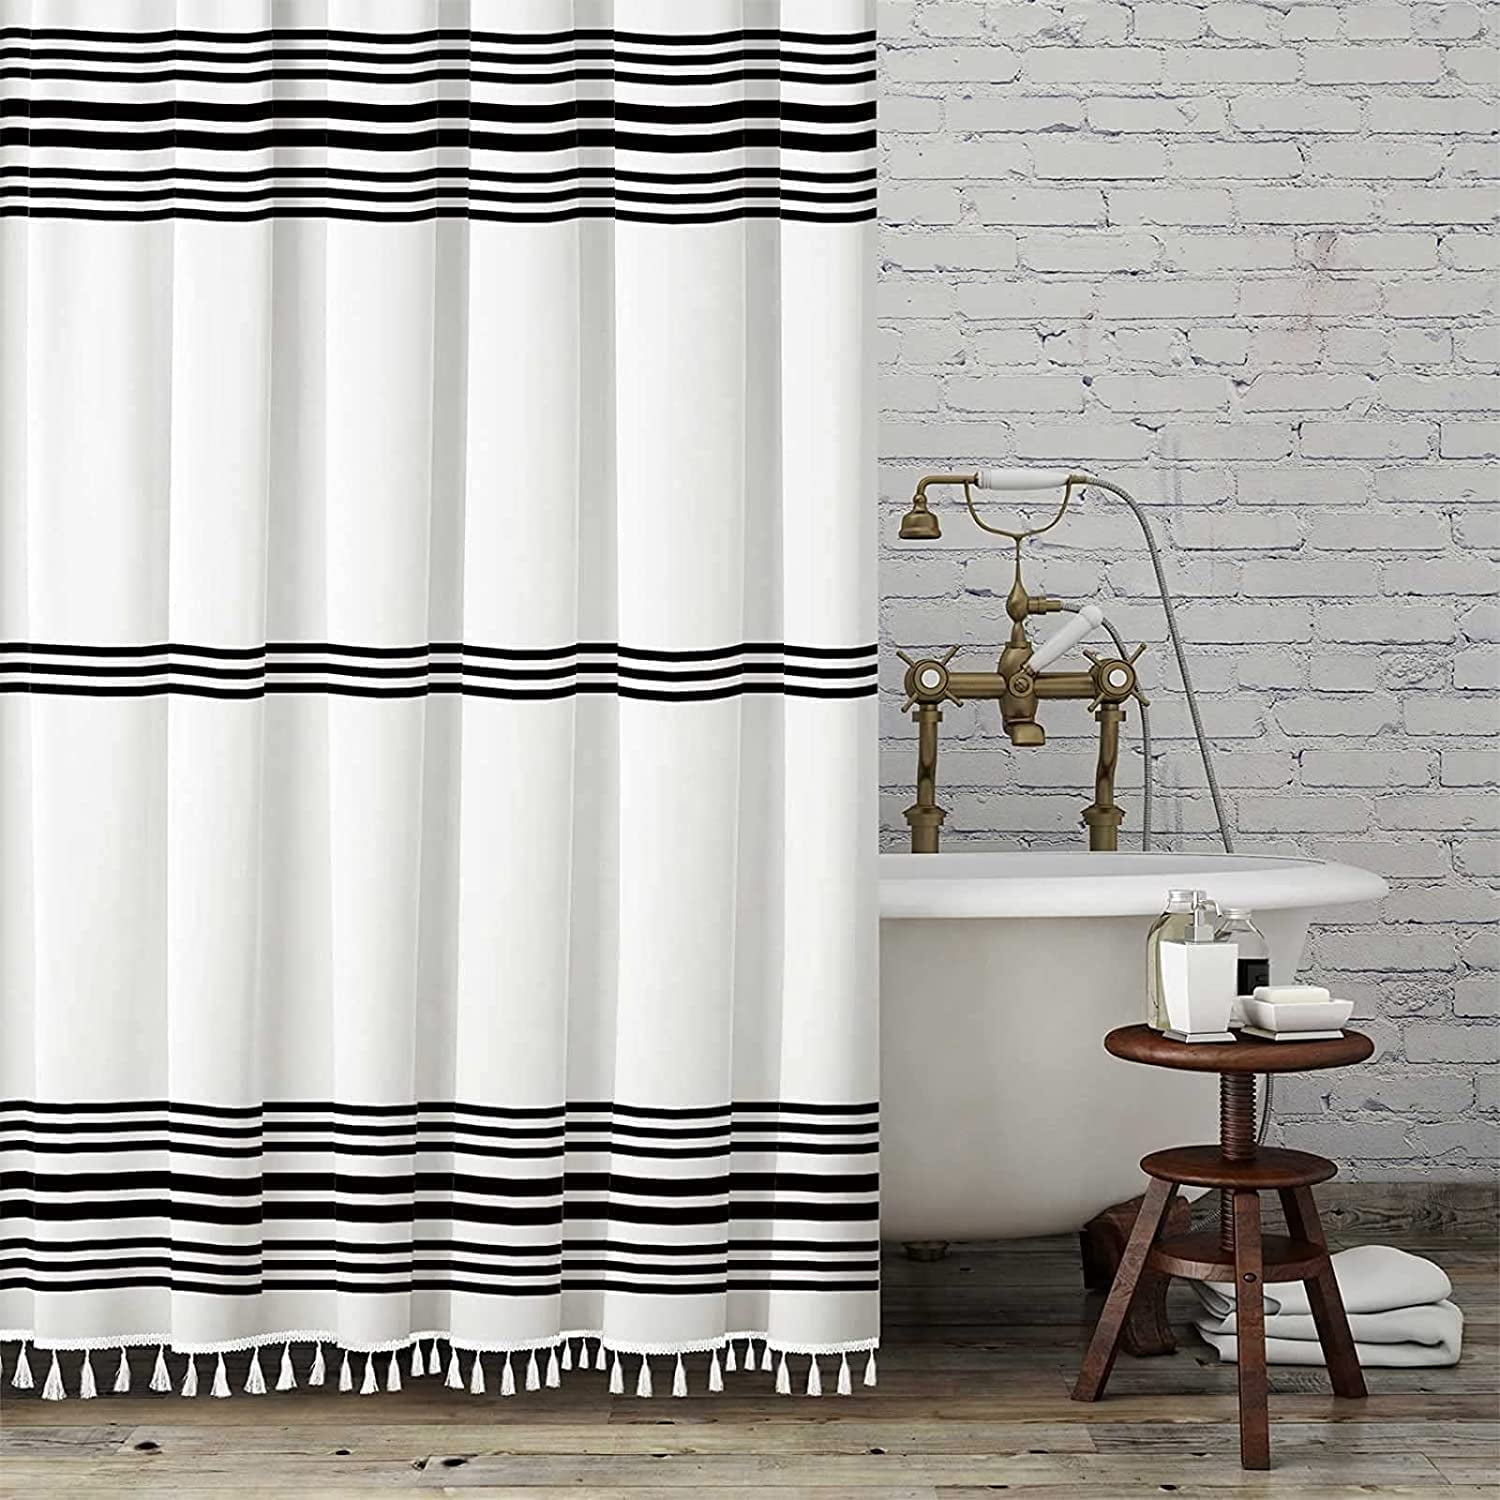 White Shower Curtain With Black Striped Farmhouse Tassel Bathroom Decor 72x96 Inch Com